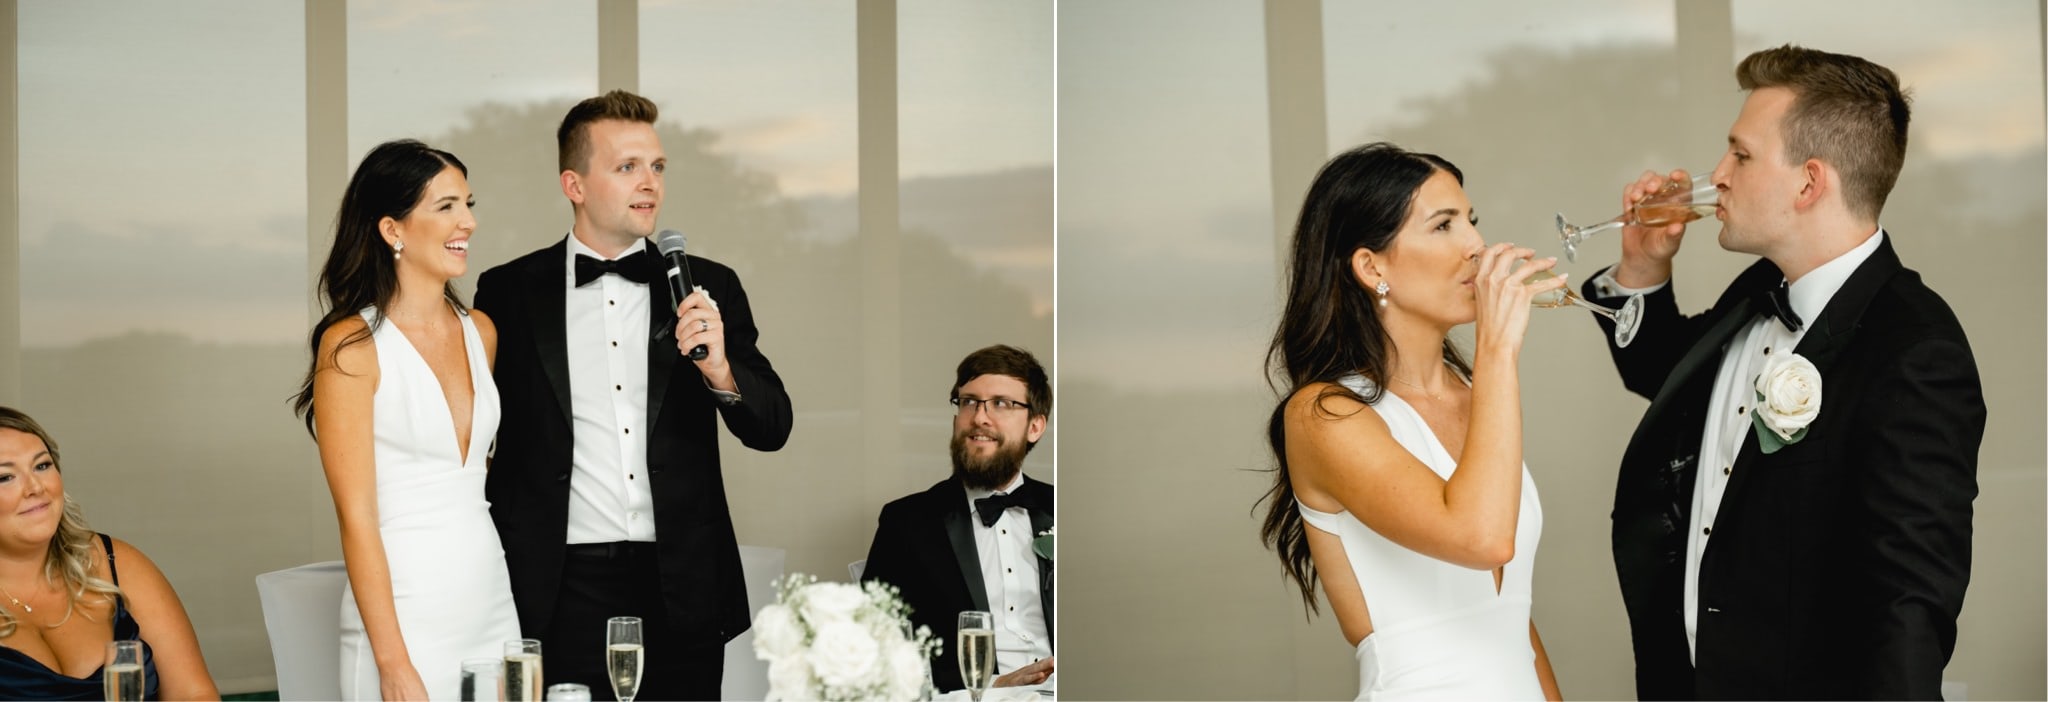 bride and groom welcome speech